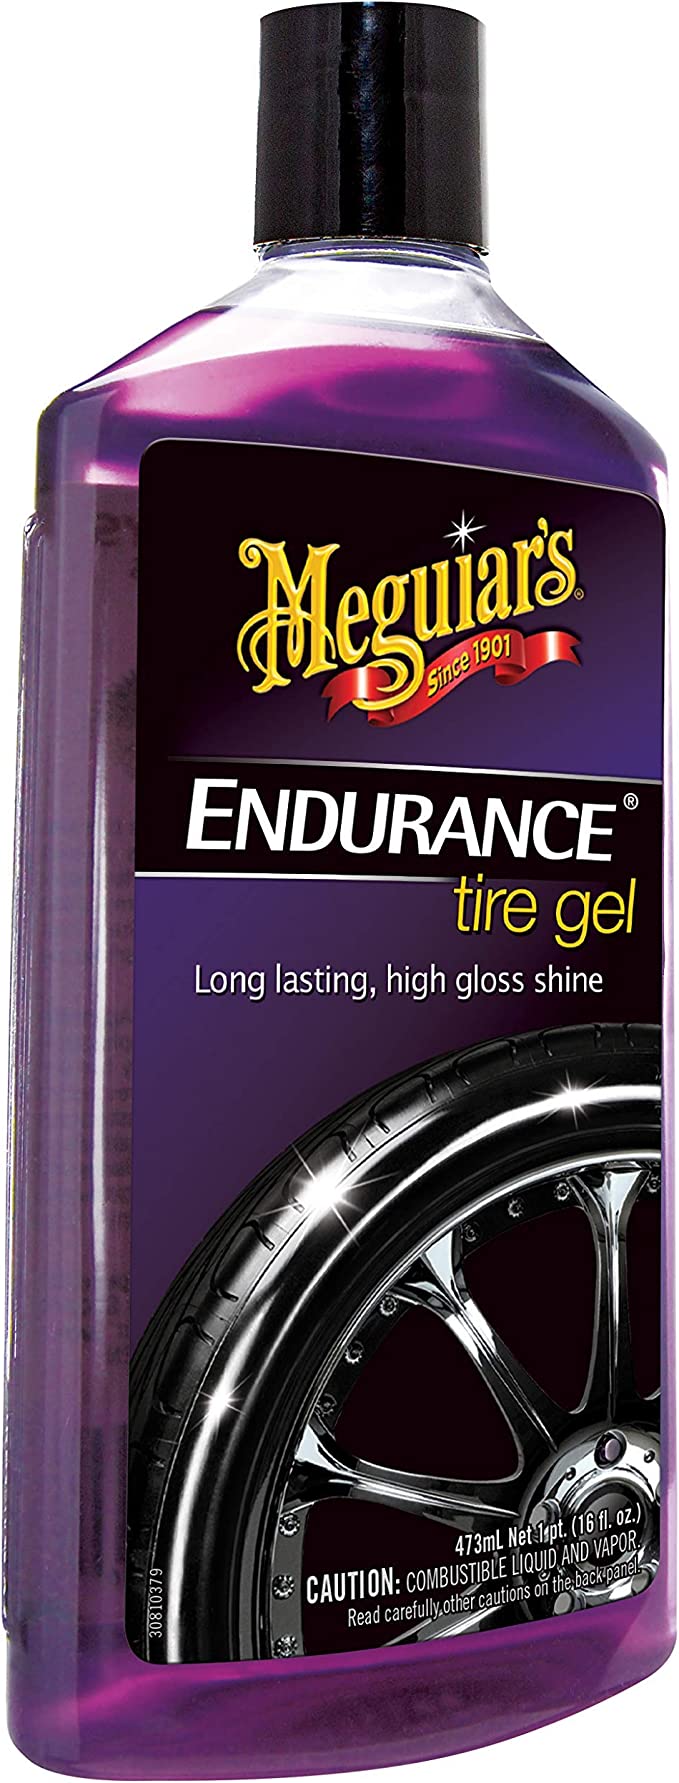 Maguiars endurance tire gel best tyre dressing